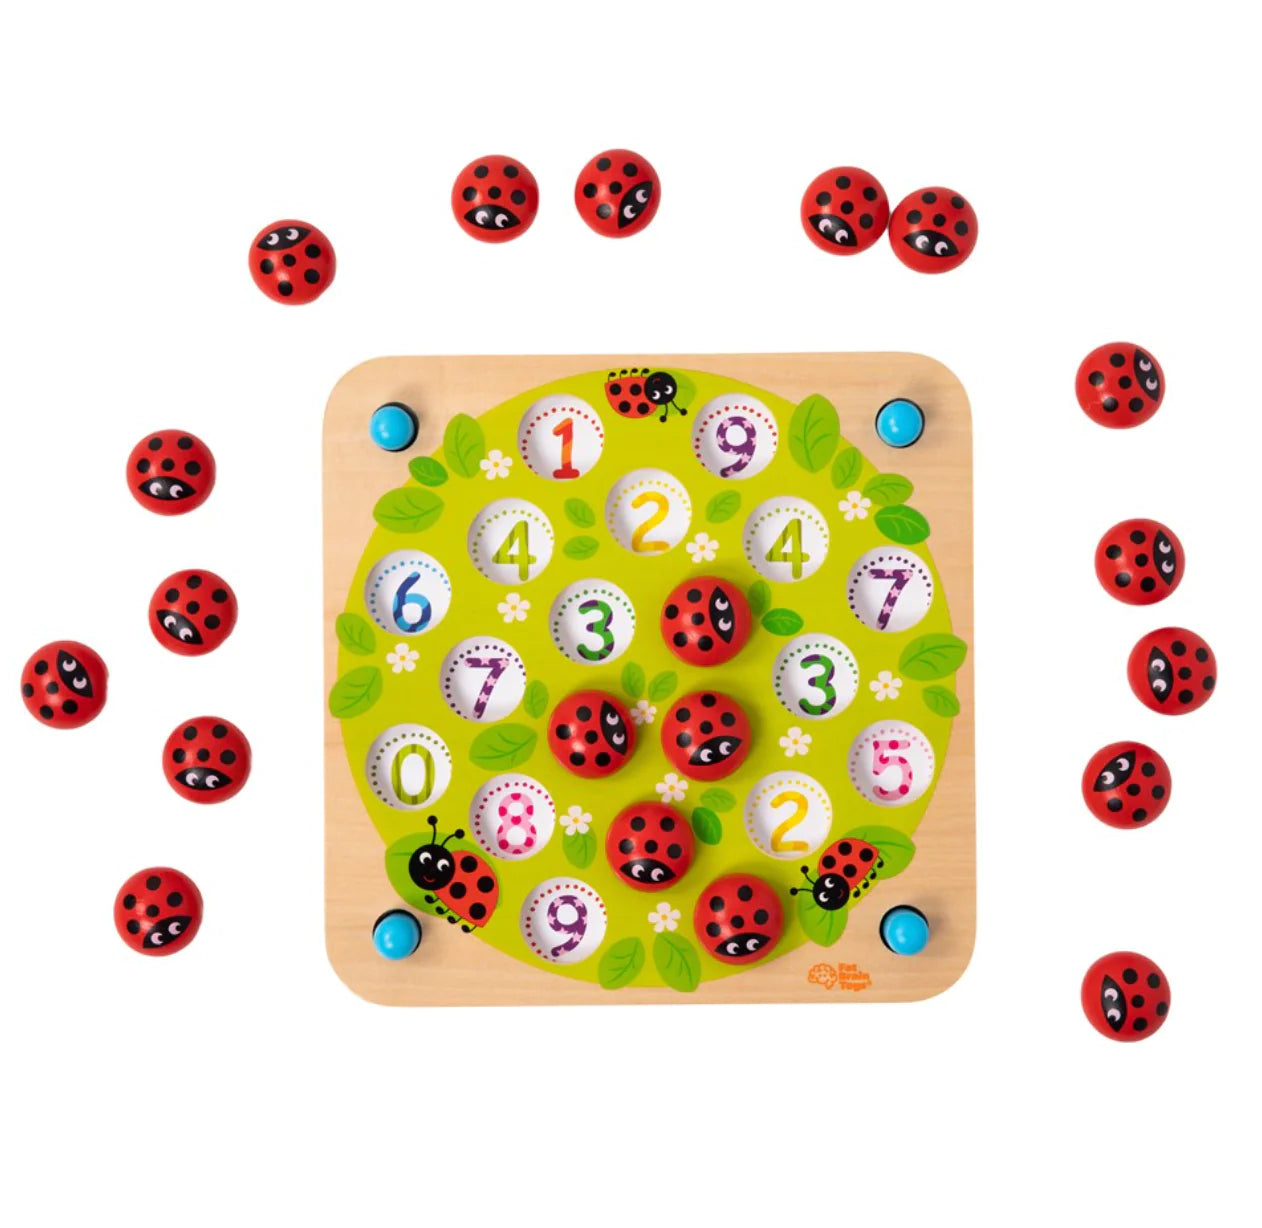 Fat Brain Toys Ladybug's Garden Memory Game